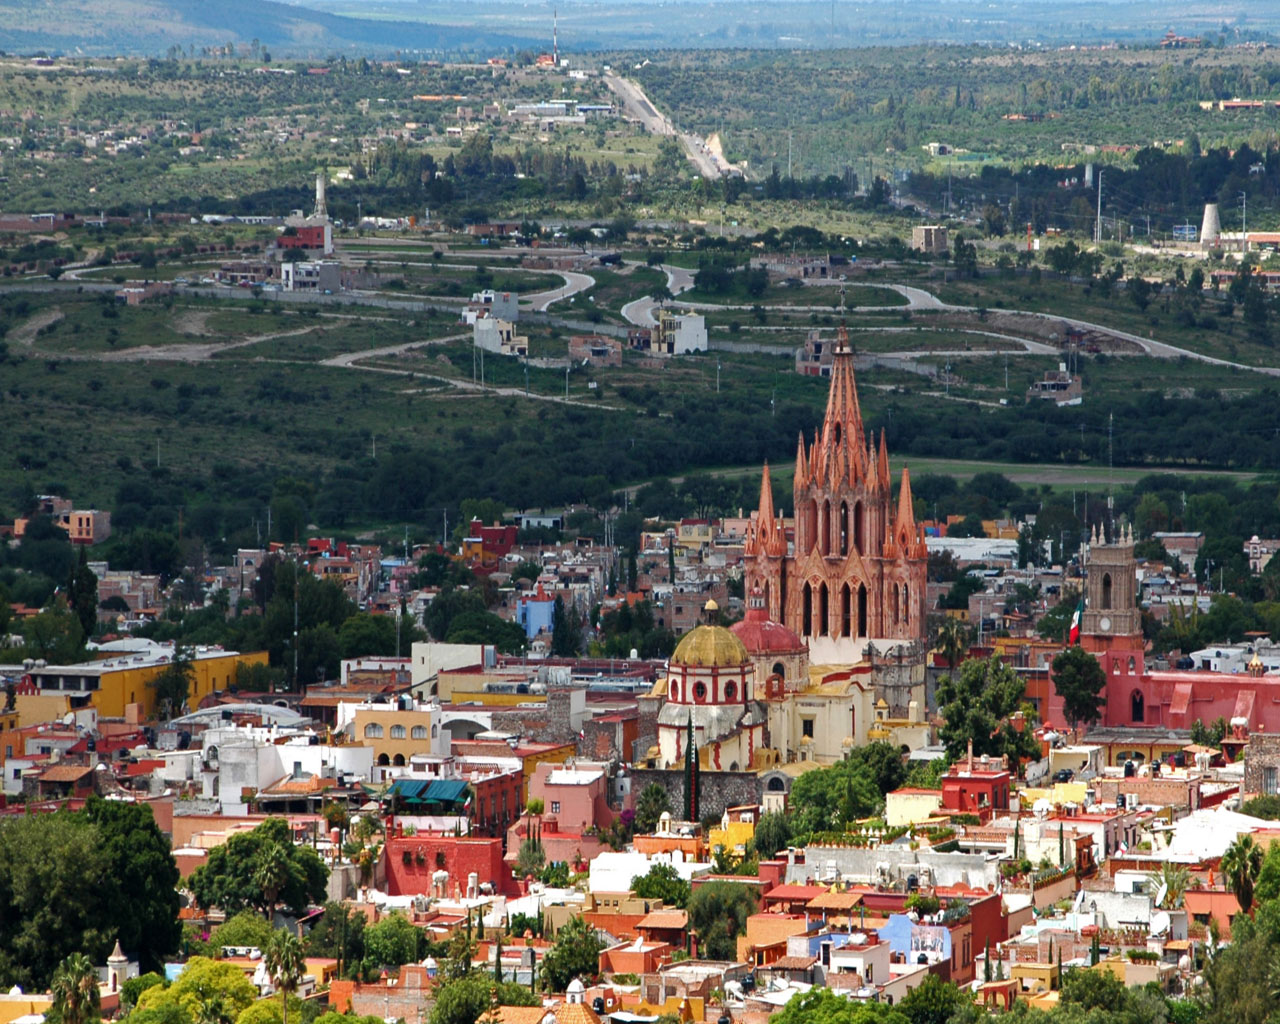 A Scenic View of San Miguel de Allende